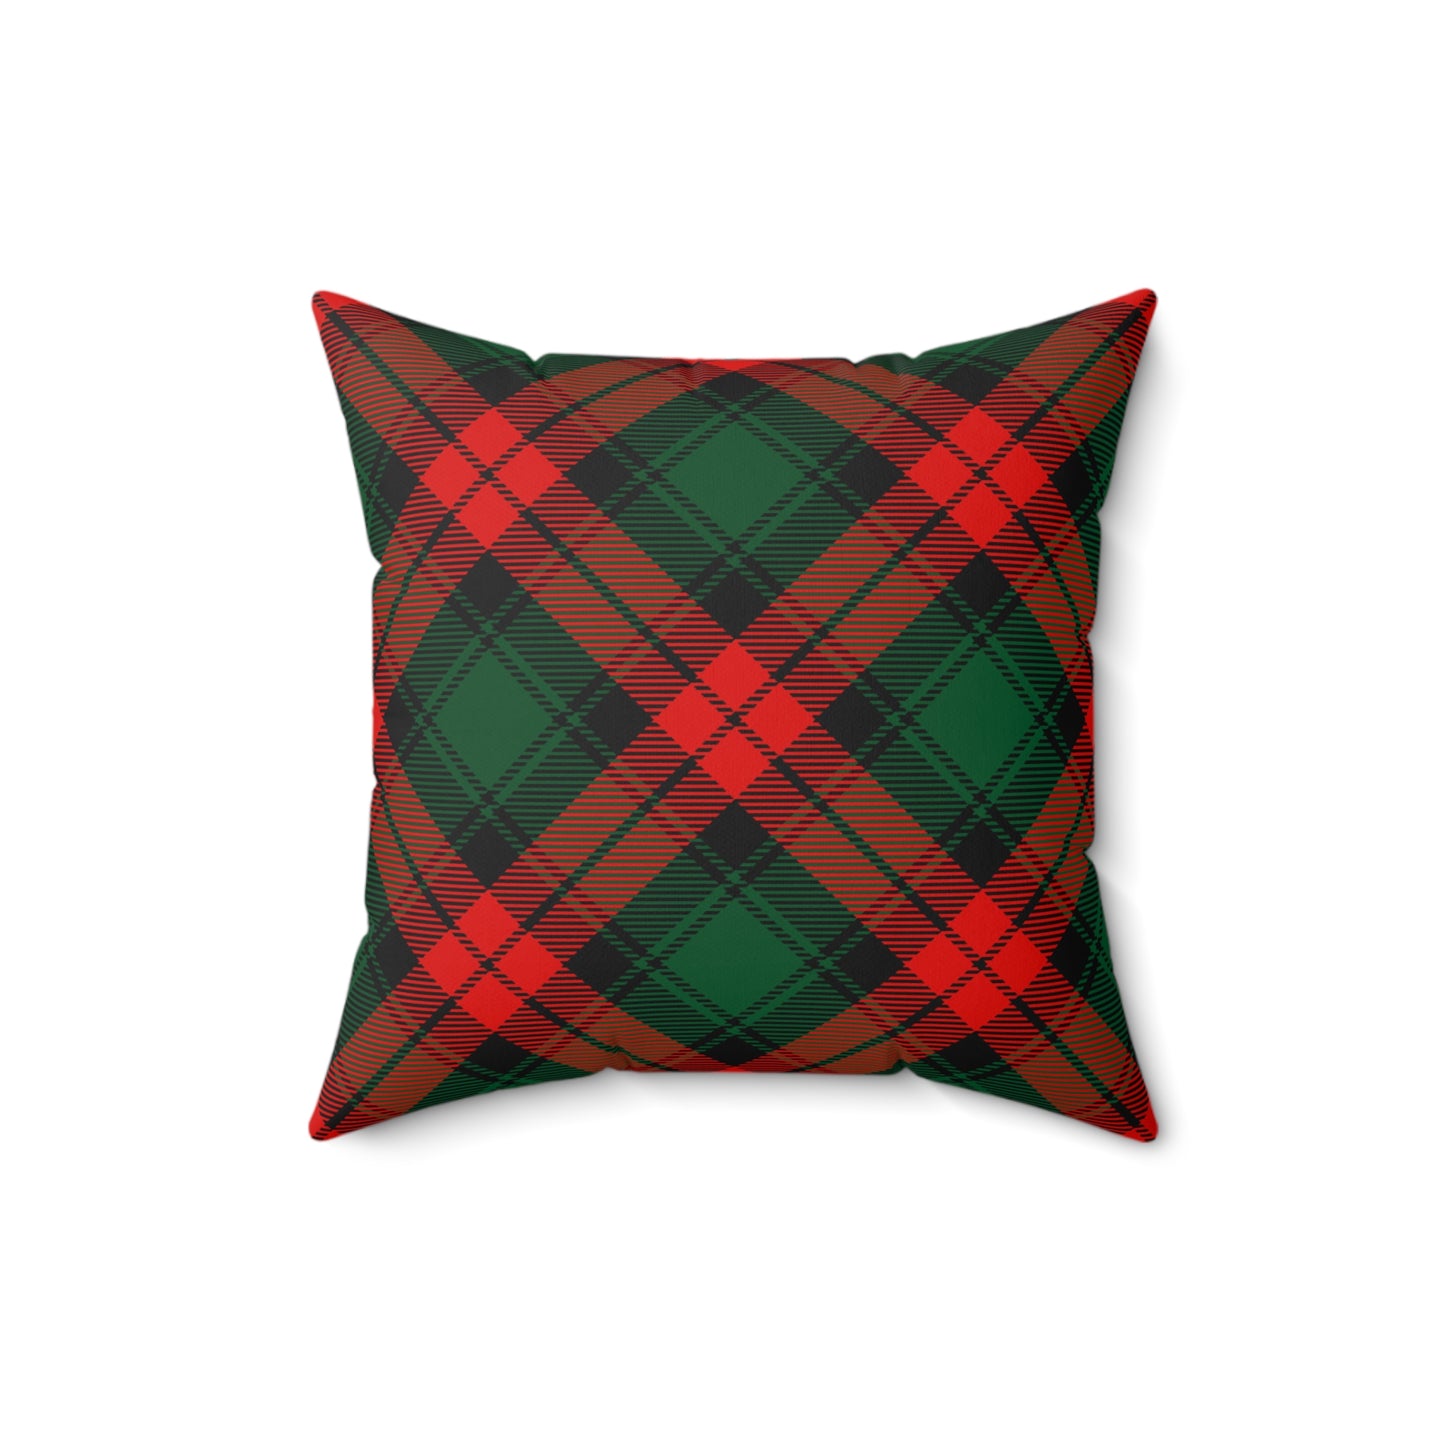 Red and Green Tartan Plaid Spun Polyester Square Pillow